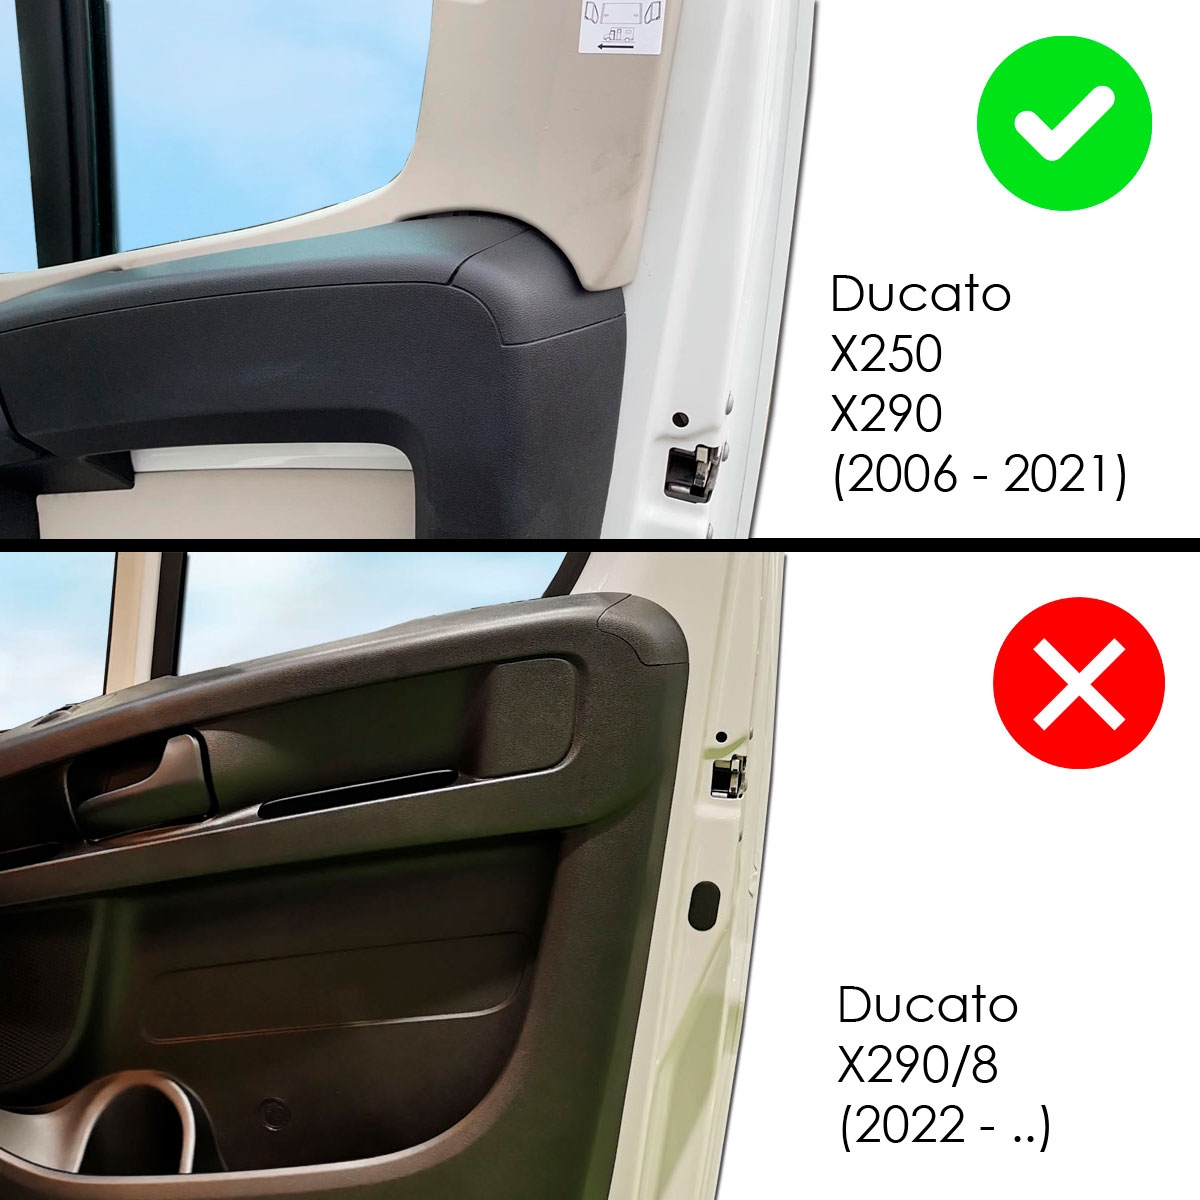 safetypack, X250 cabine + 2x VAN security, white